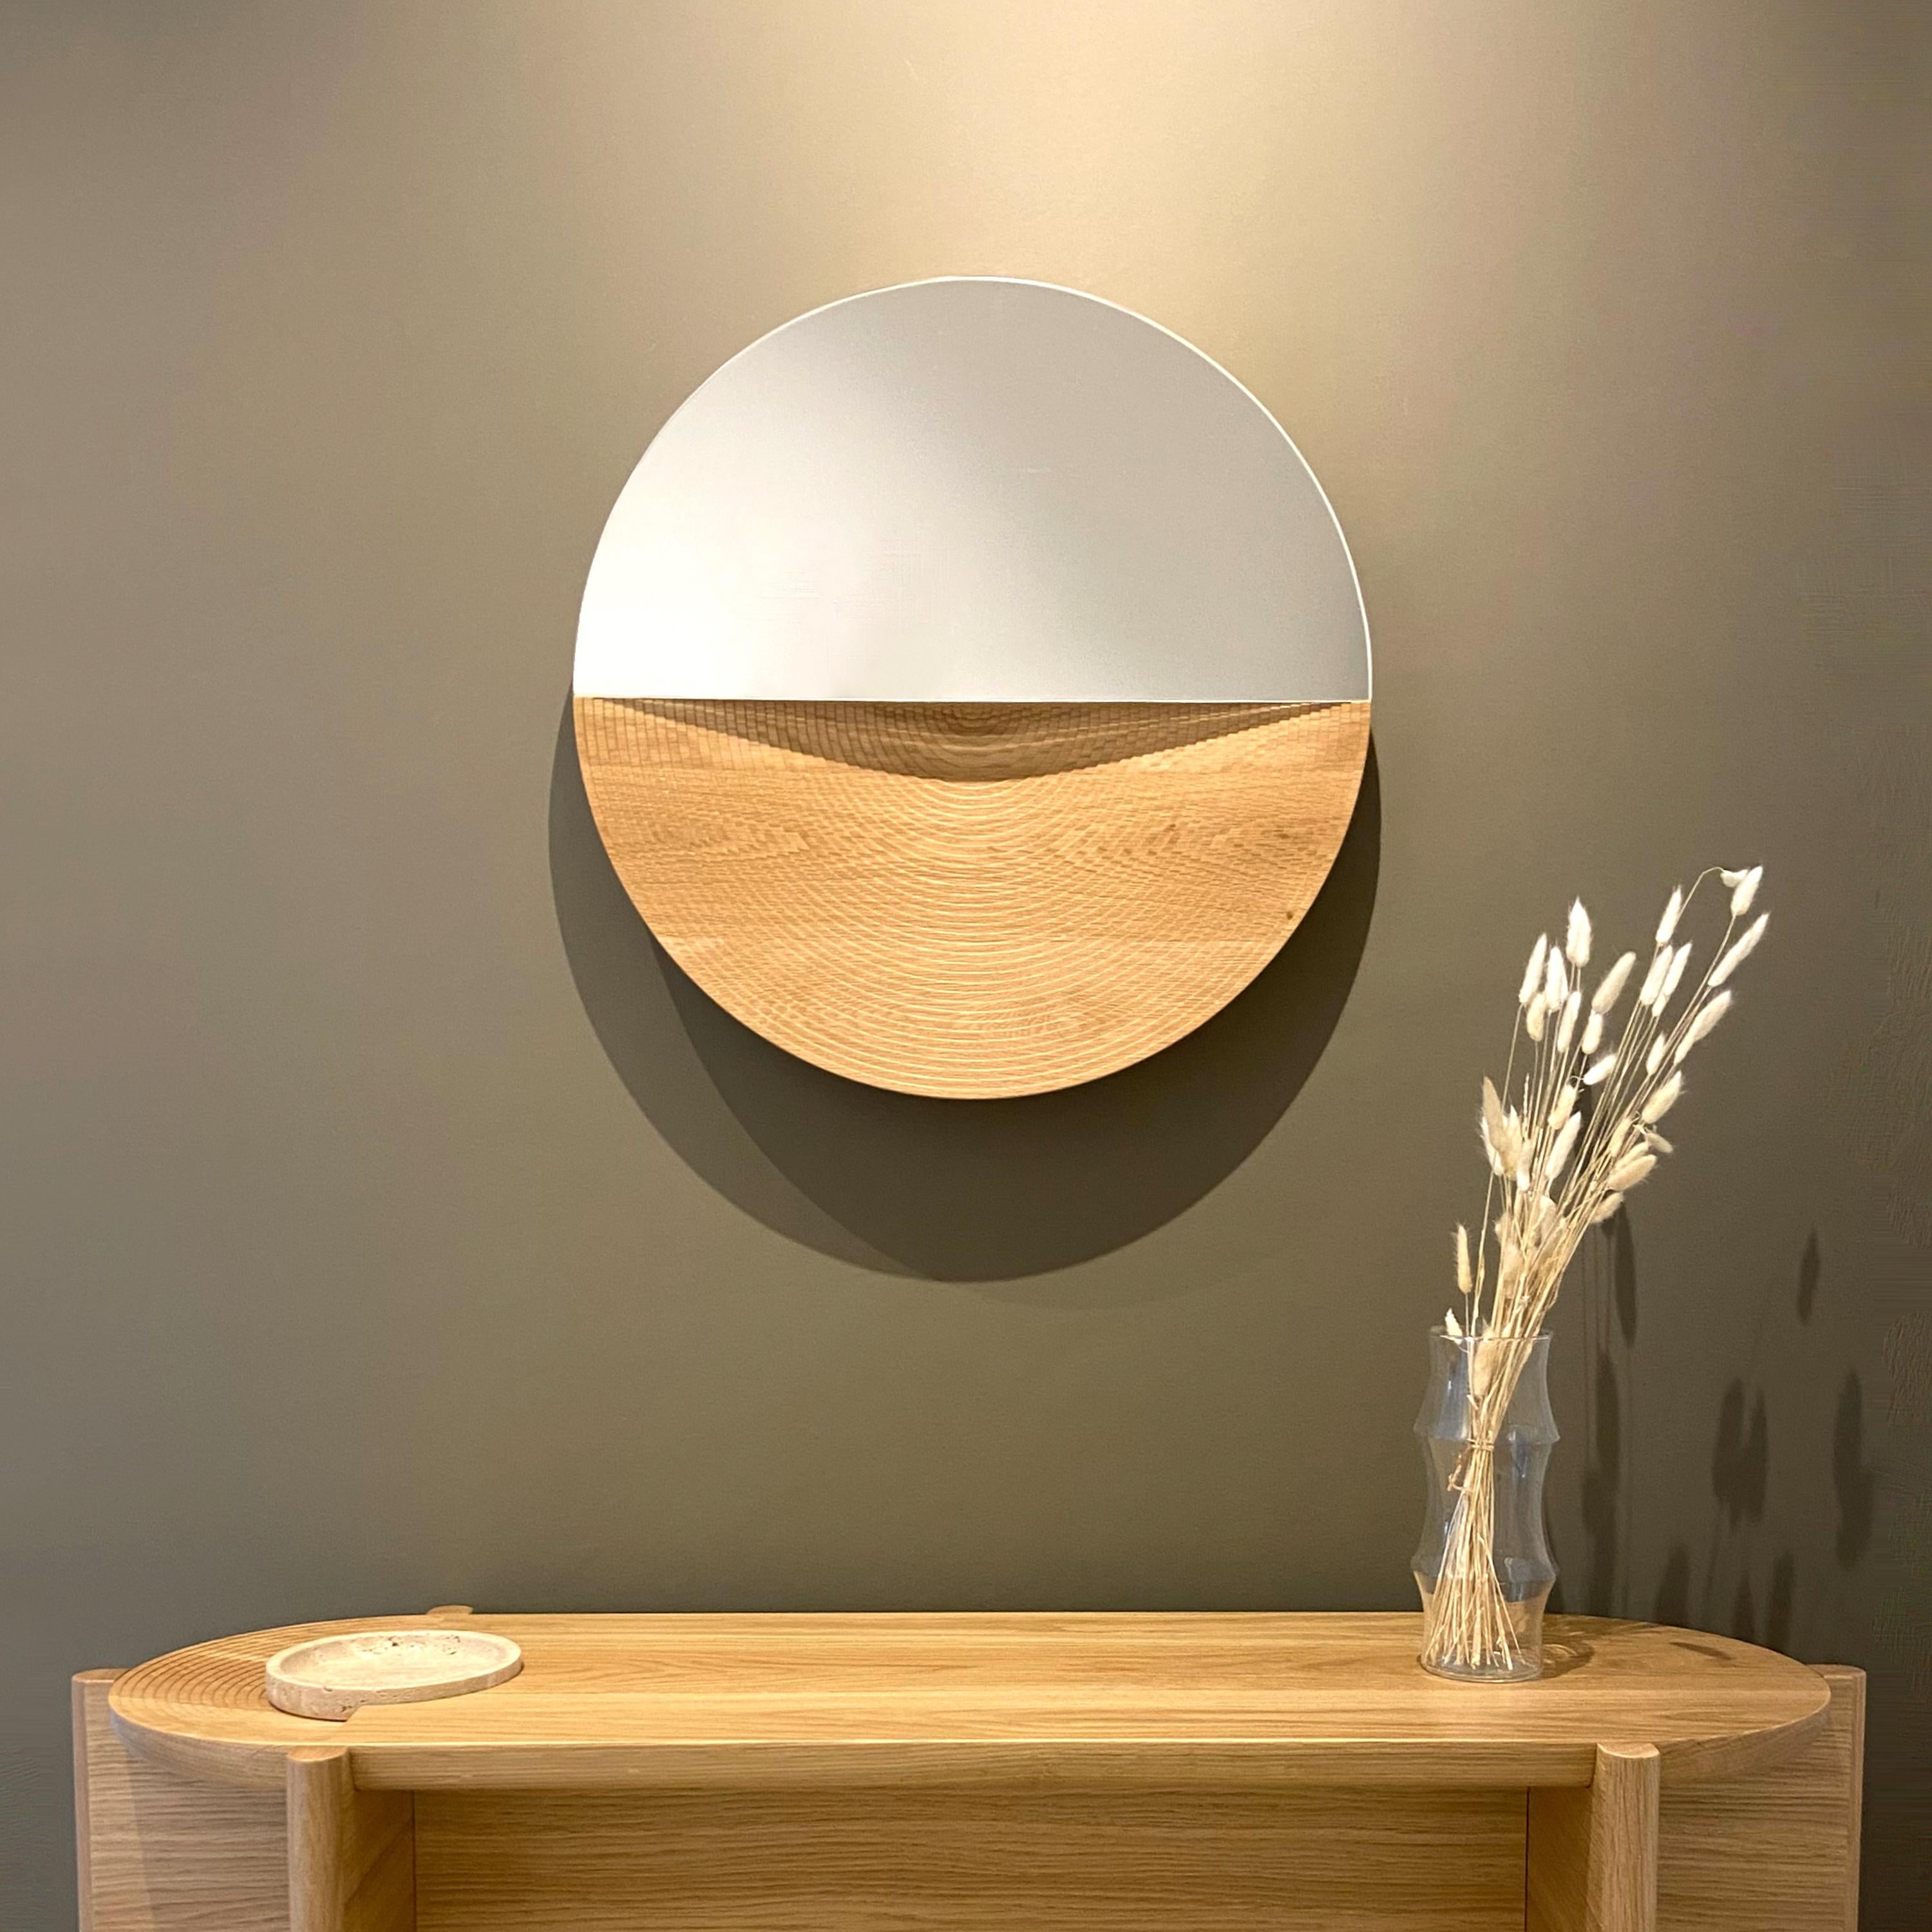 Hand-Crafted Arkhe Mirror in Oak, Modern Round Sculptural by Fulden Topaloglu For Sale